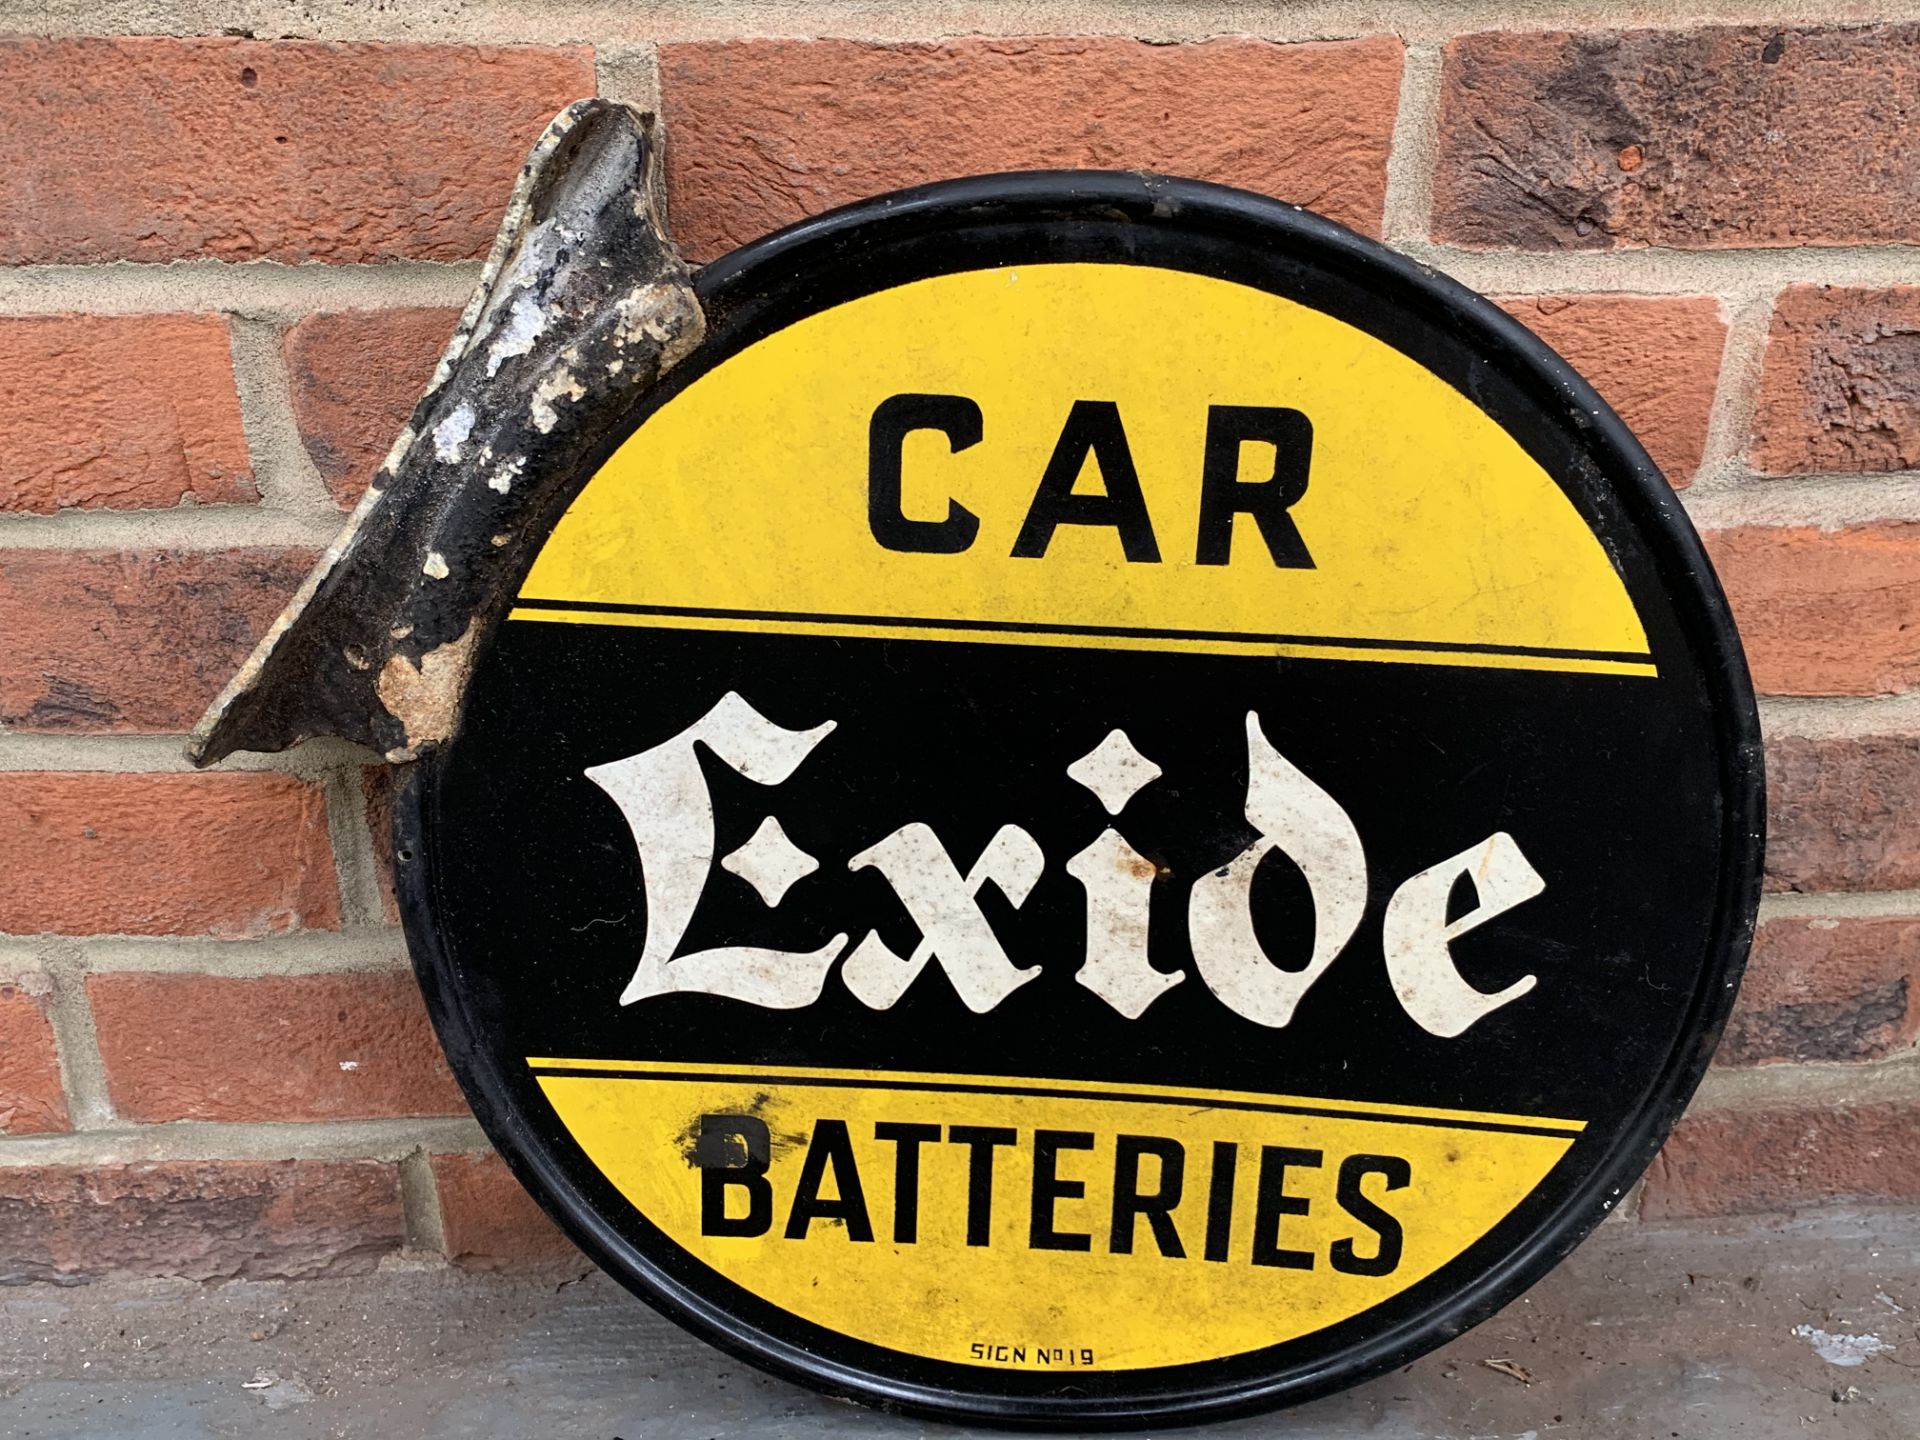 Original Aluminium Flanged Circular Car Exide Batteries" Sign"